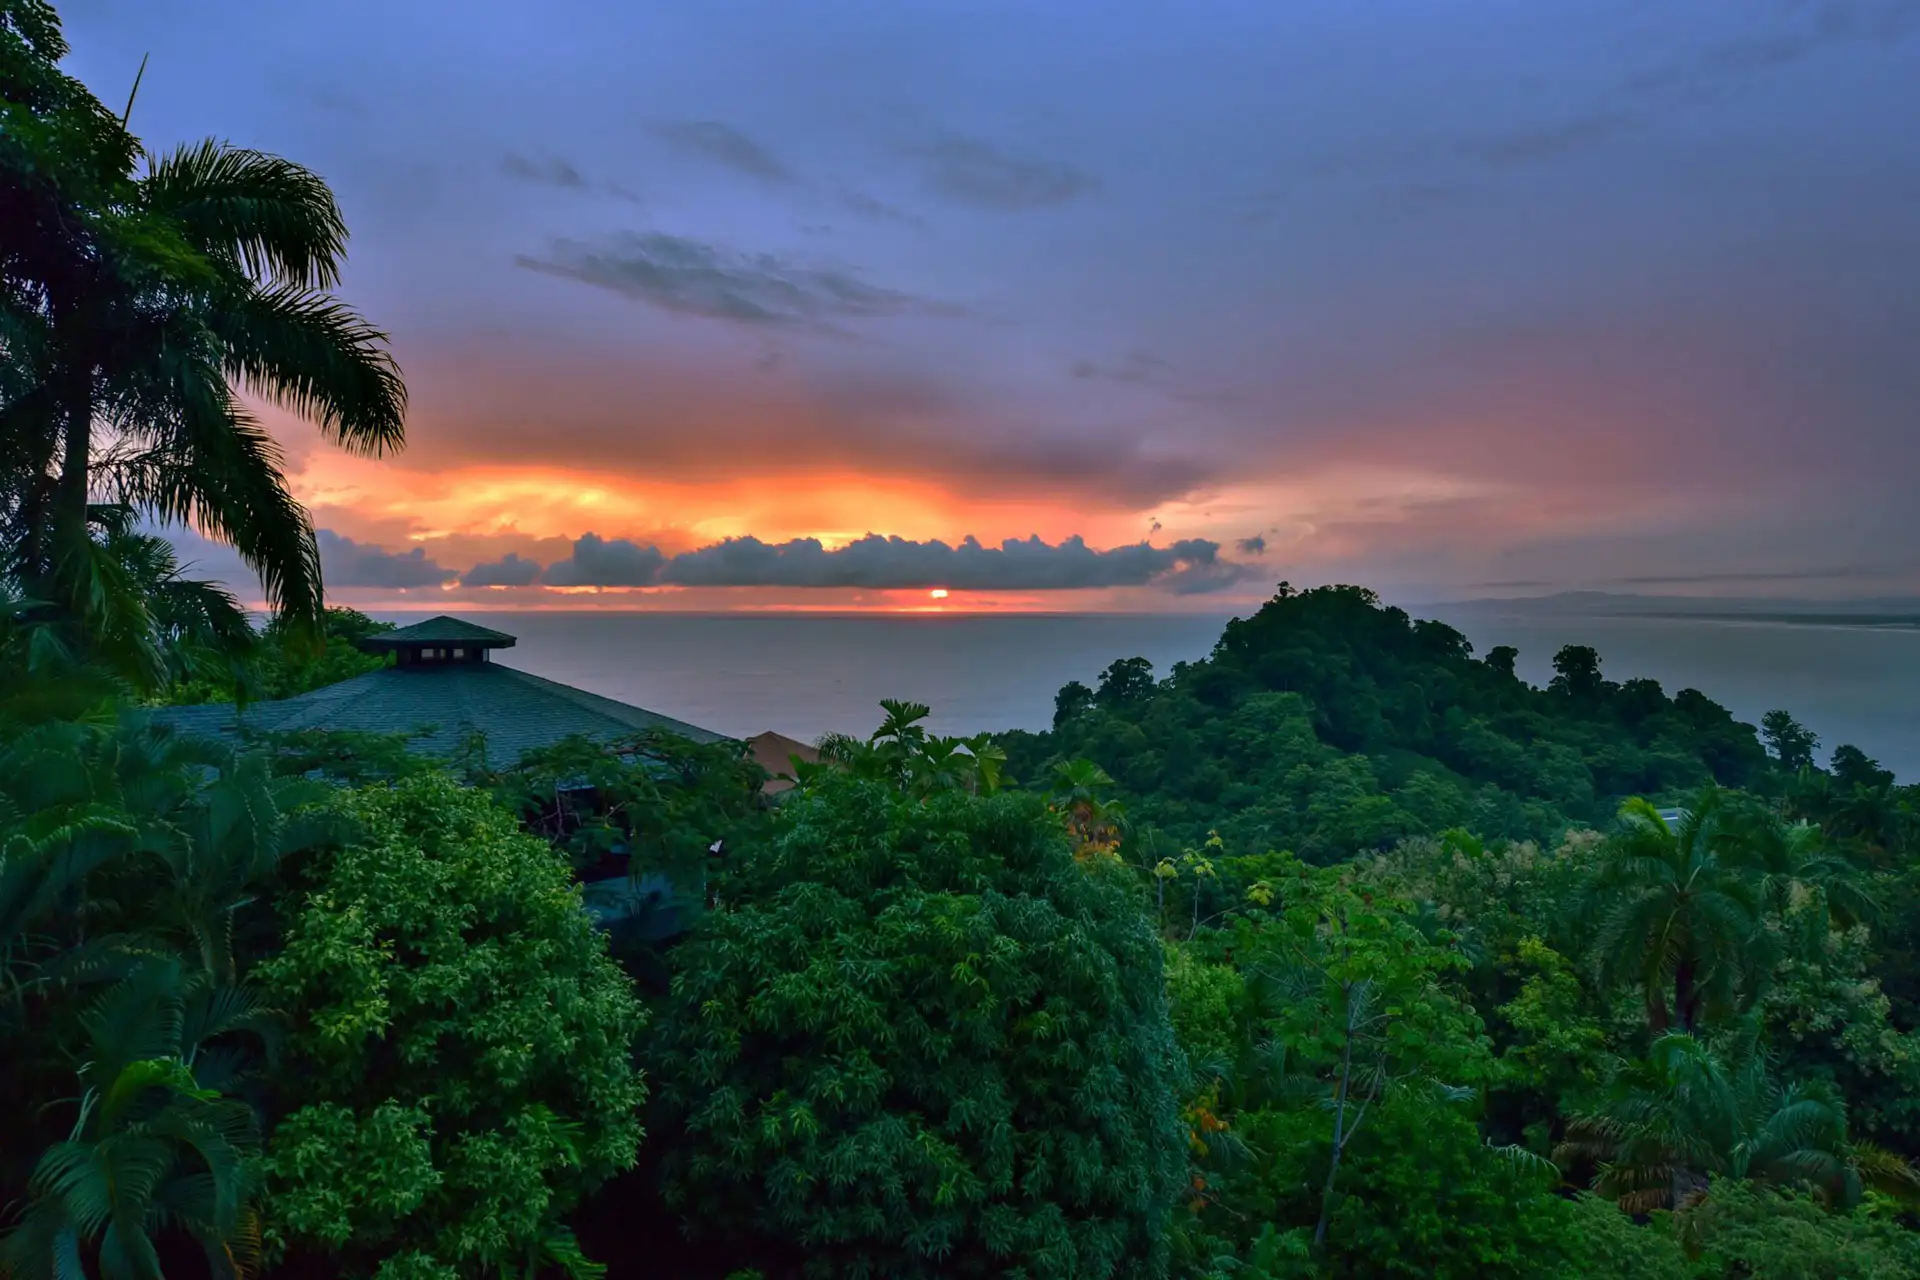 View from Tulemar Buena Vista Luxury Villas in Costa Rica; Courtesy of Tulemar Buena Vista Luxury Villas